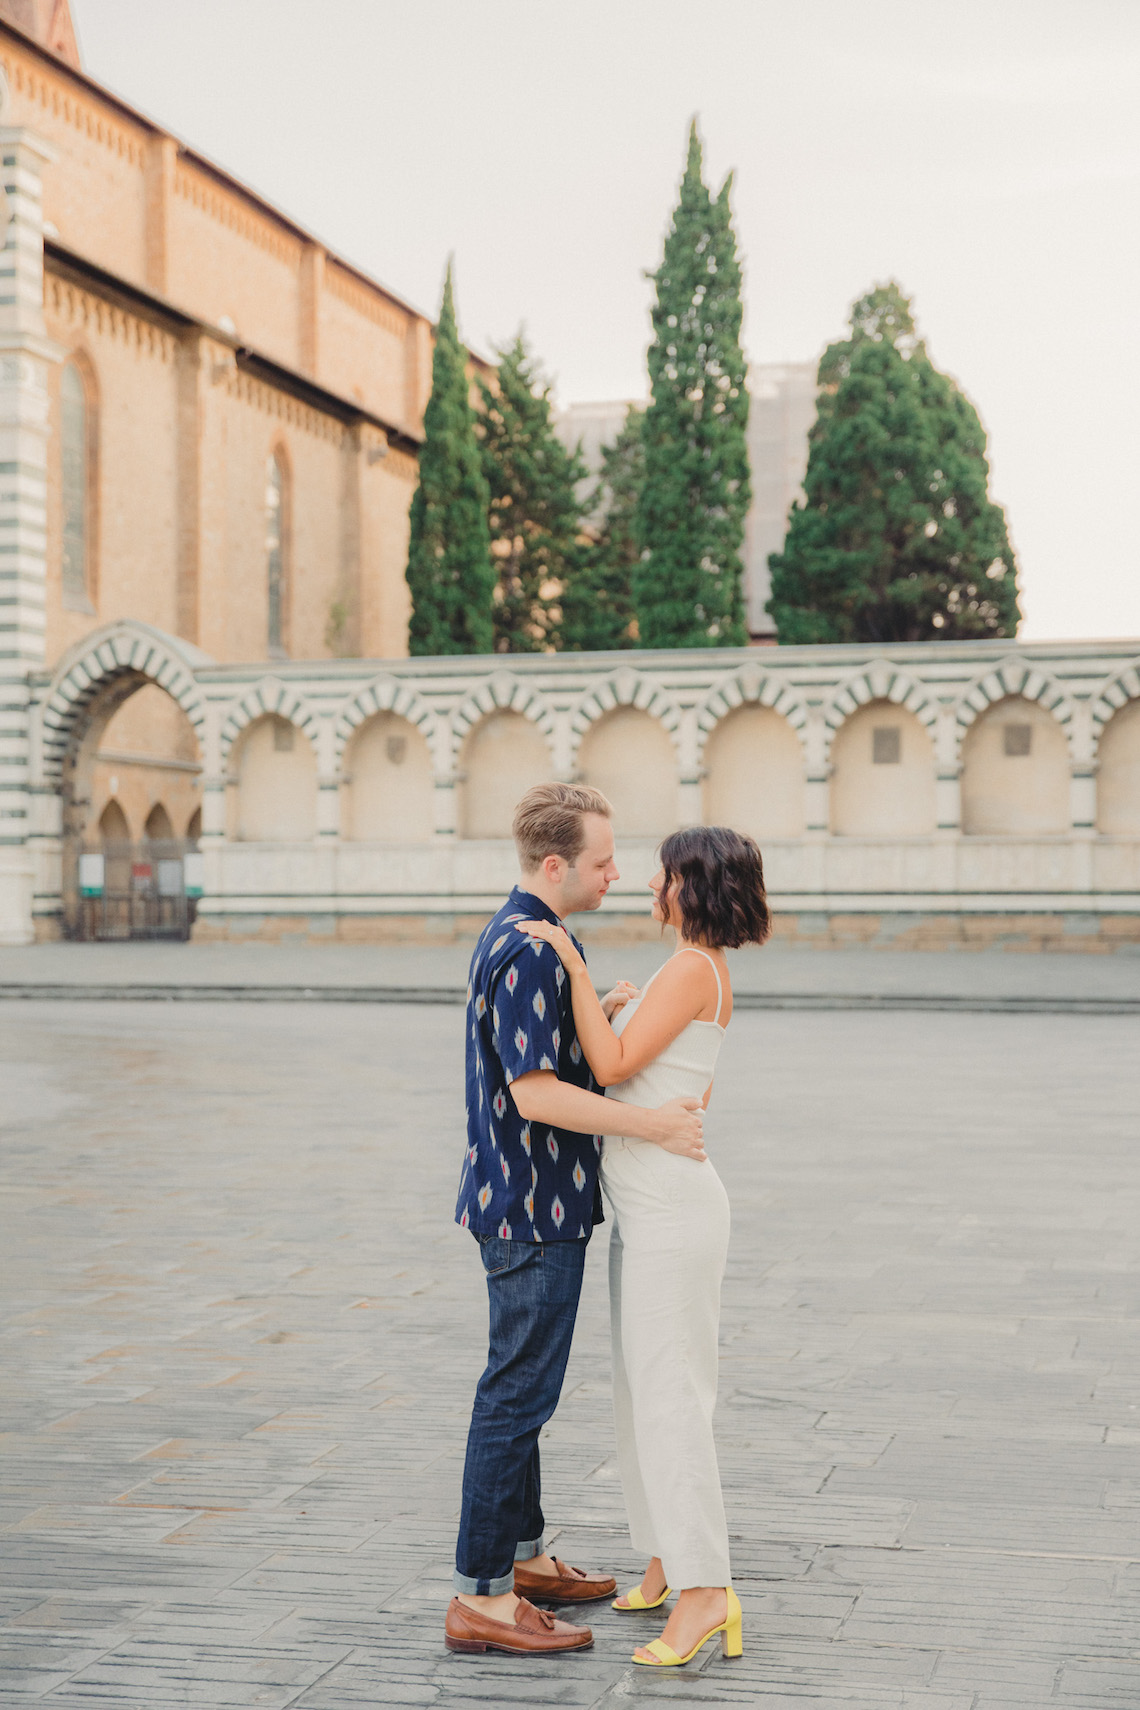 The Local Guide To A Florence Italy Honeymoon – Olga Makarova 7